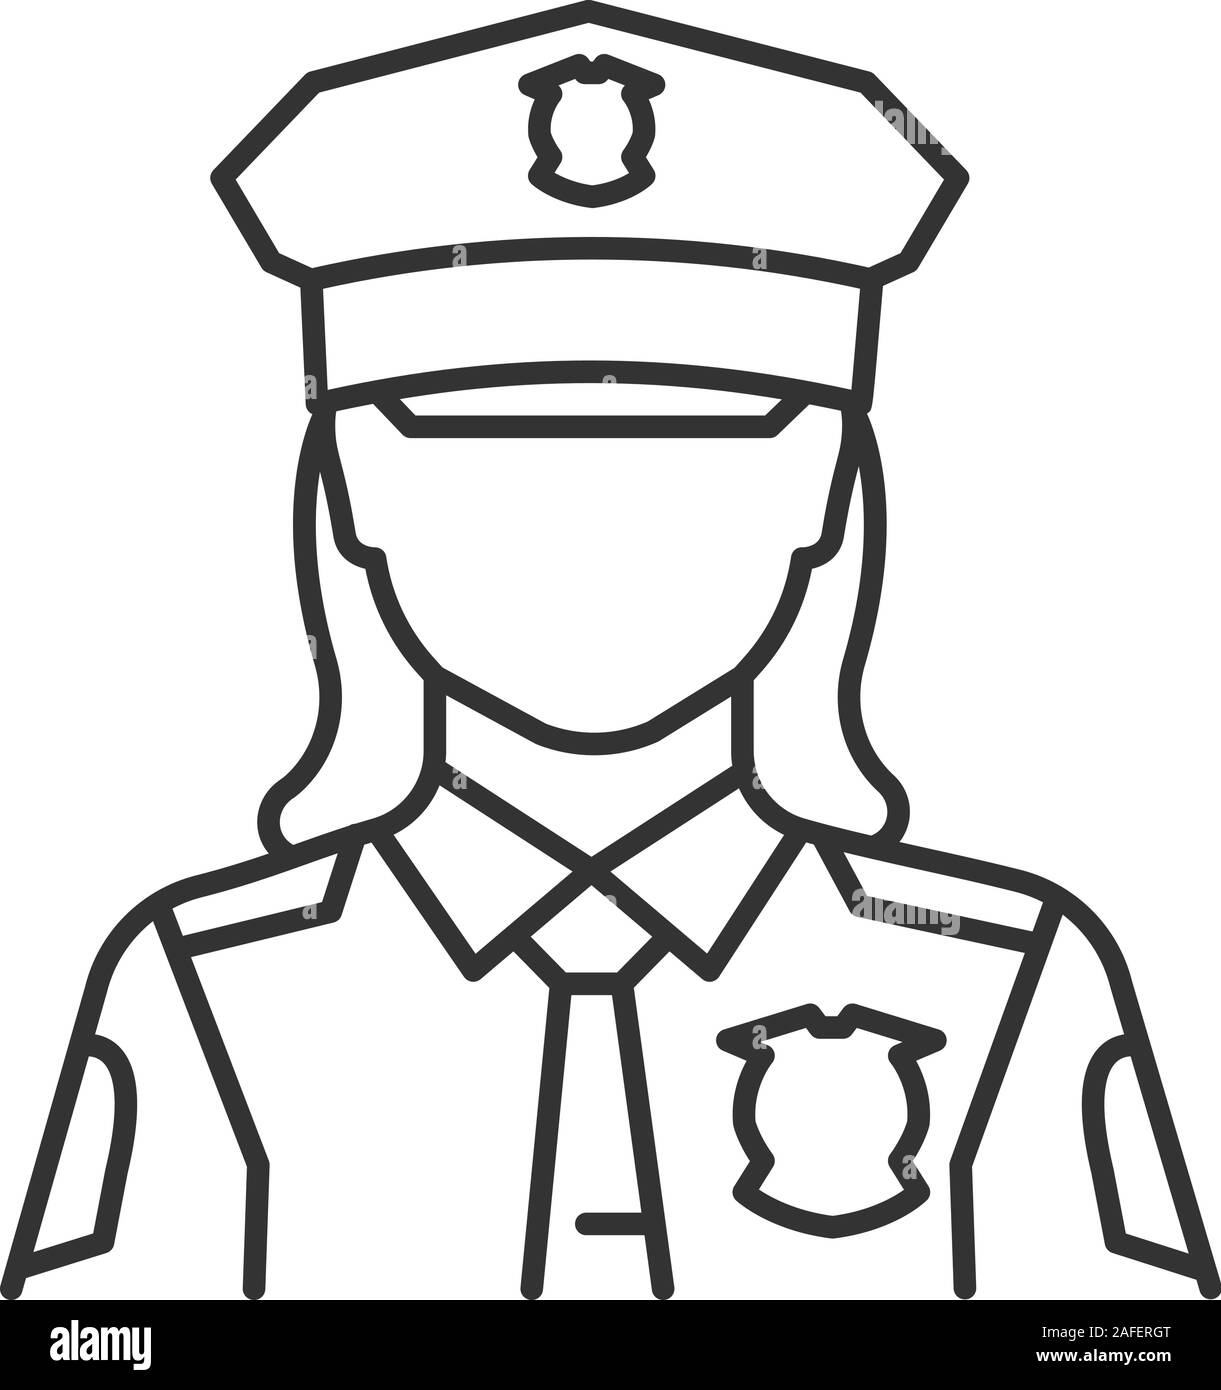 Policia mujer dibujo Imágenes recortadas de stock - Alamy